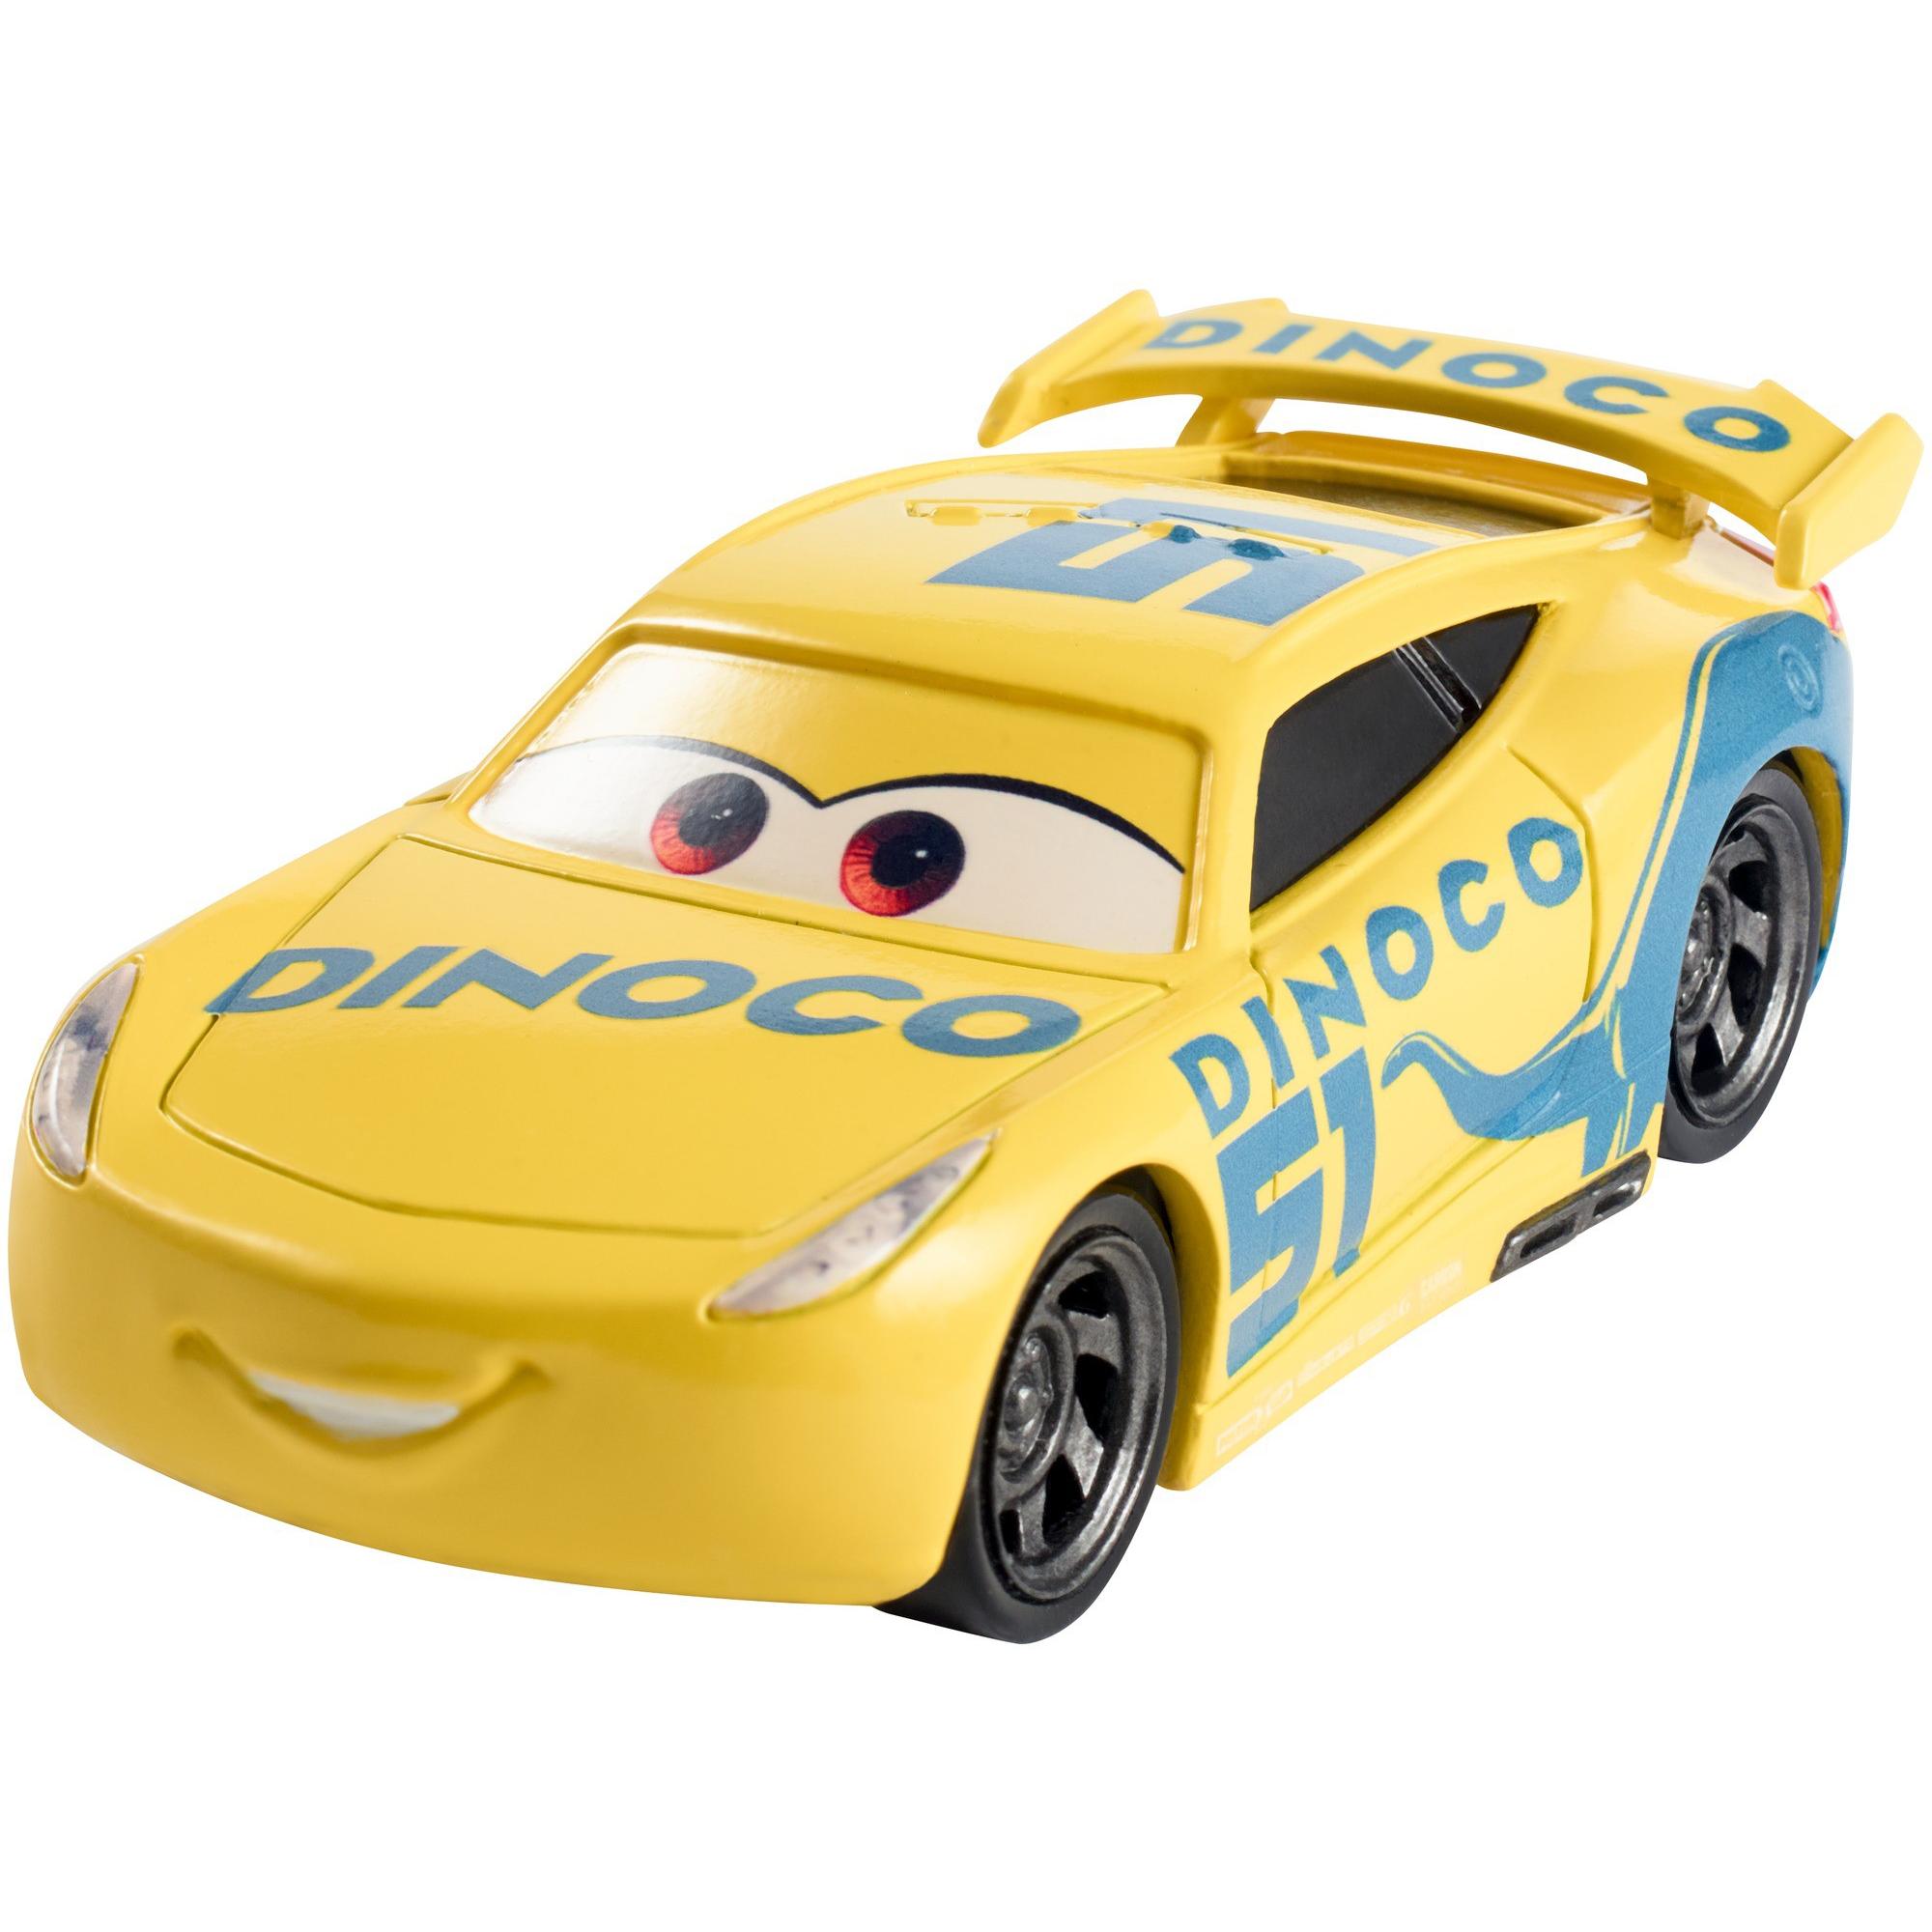 Disney/Pixar Cars 3 Dinoco Cruz Ramirez Die-Cast Vehicle - image 1 of 5